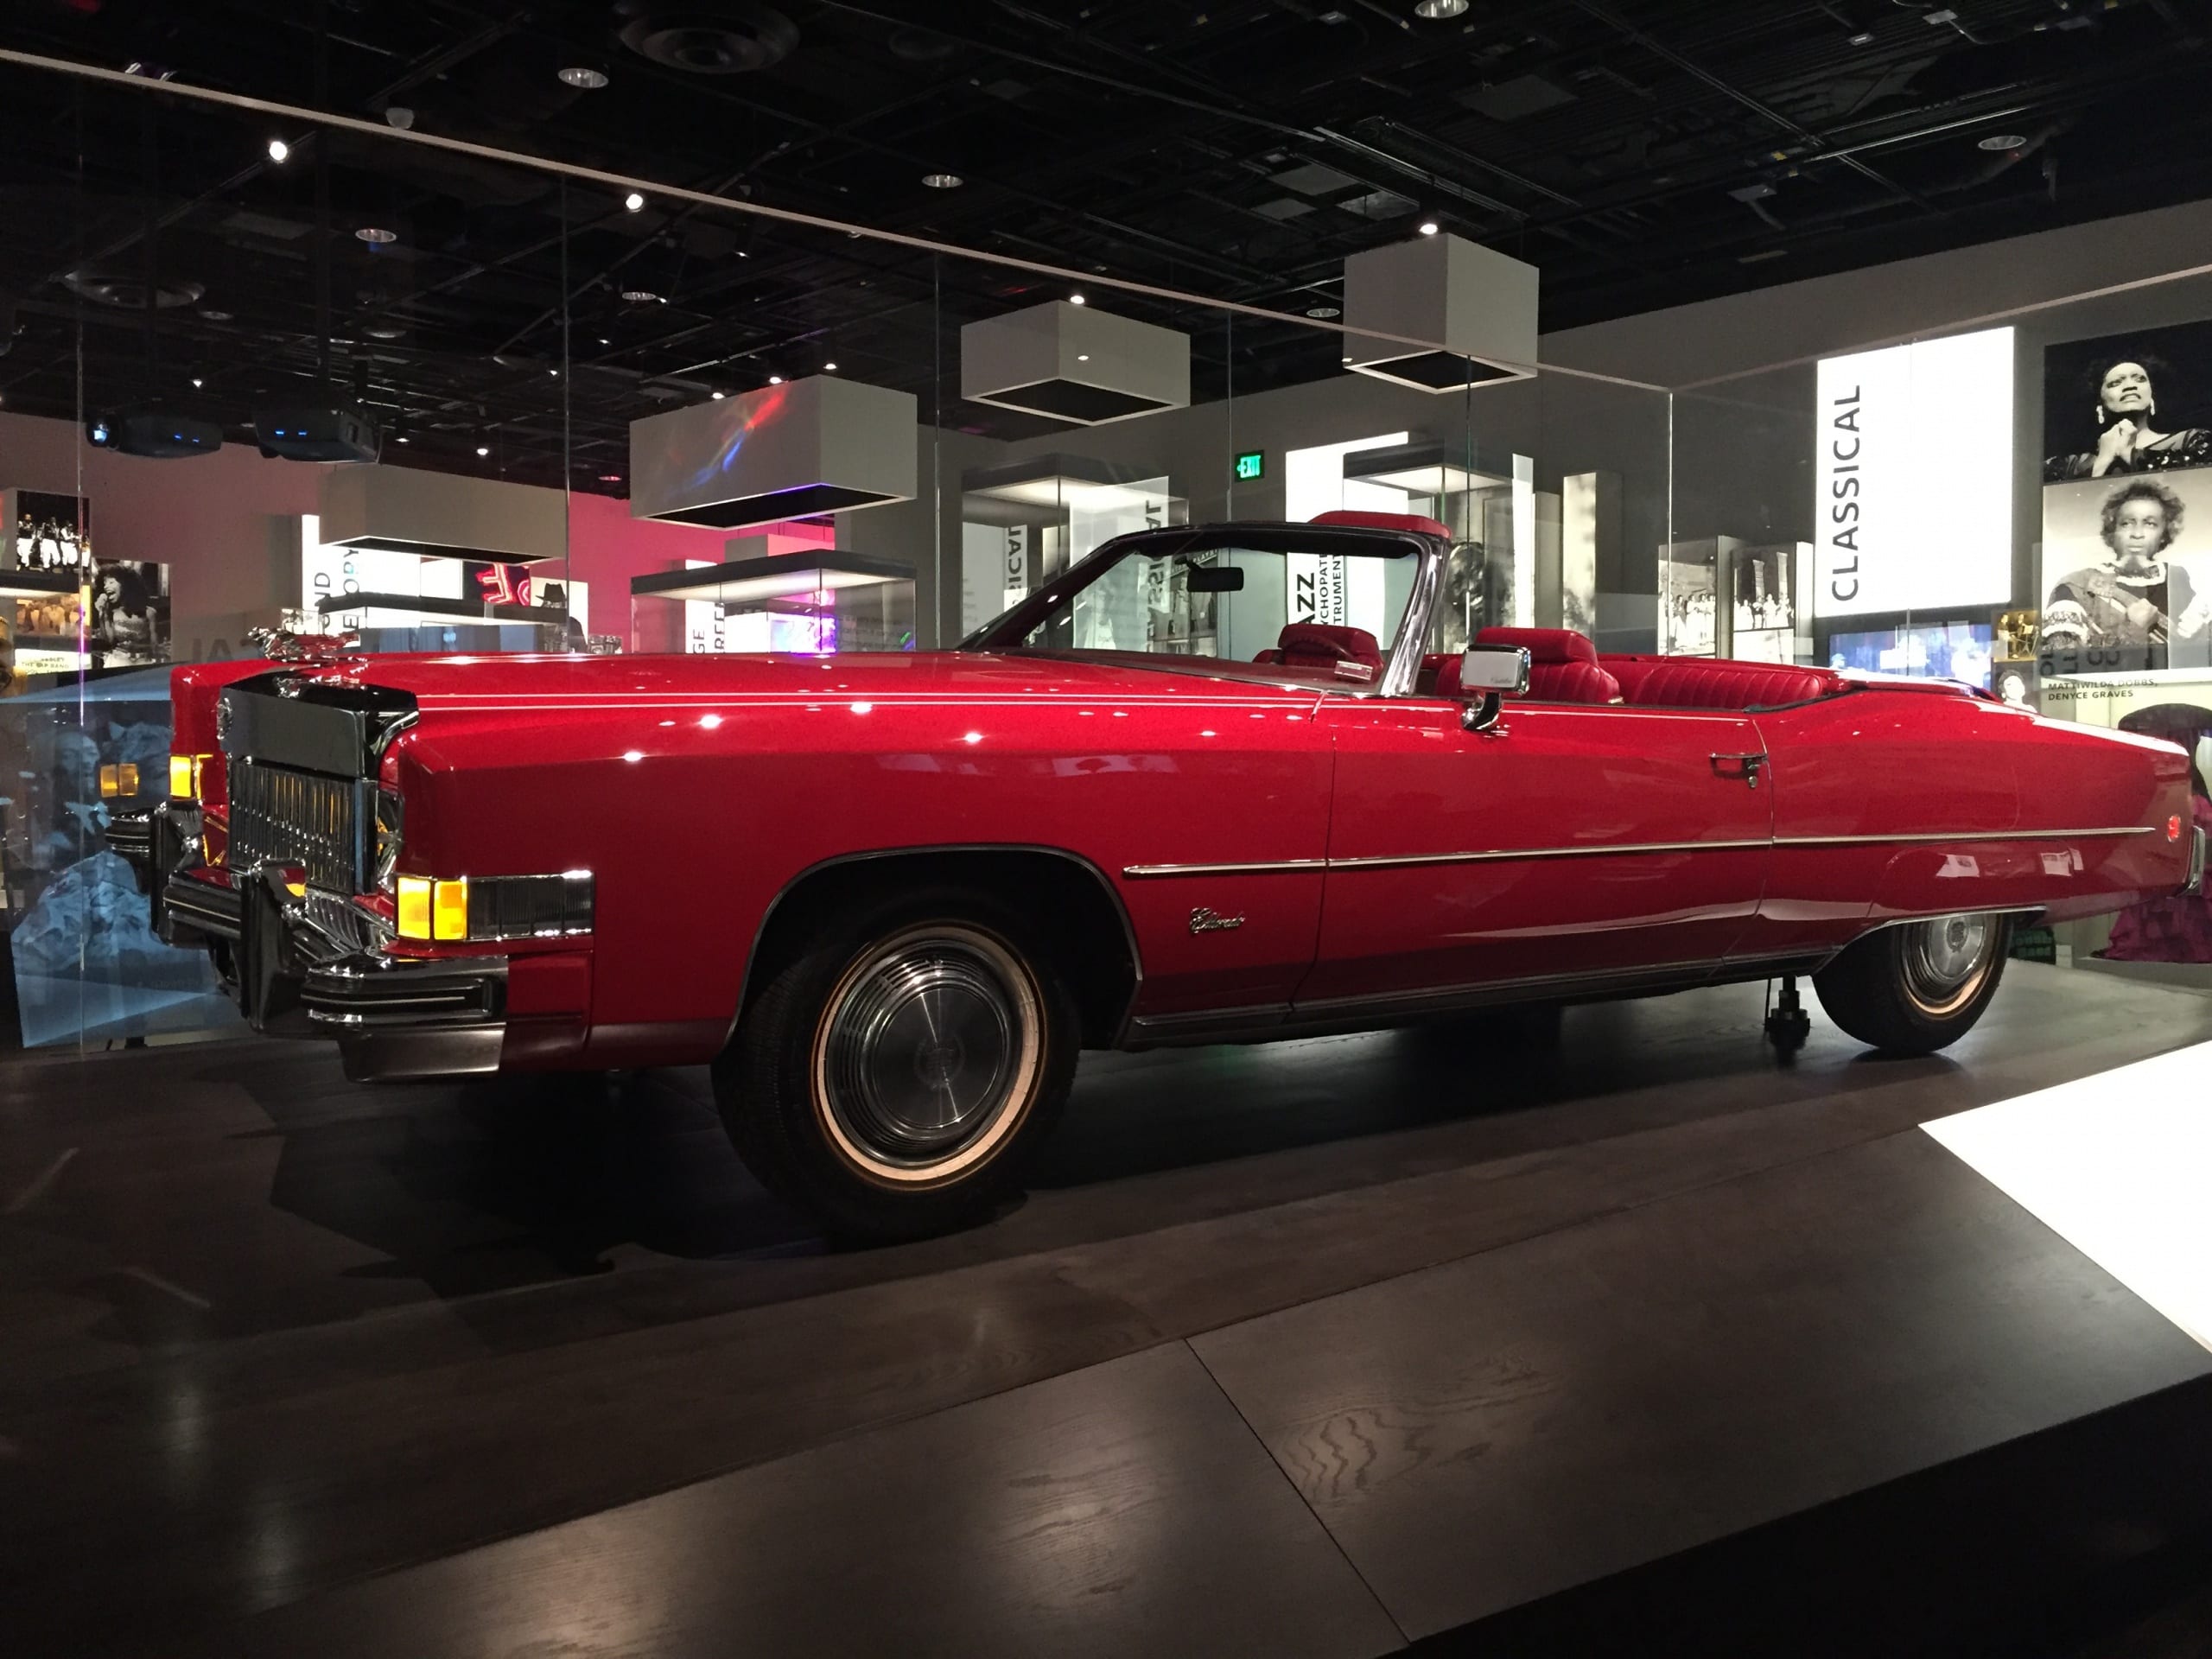 large shiny red Cadillac on a platform